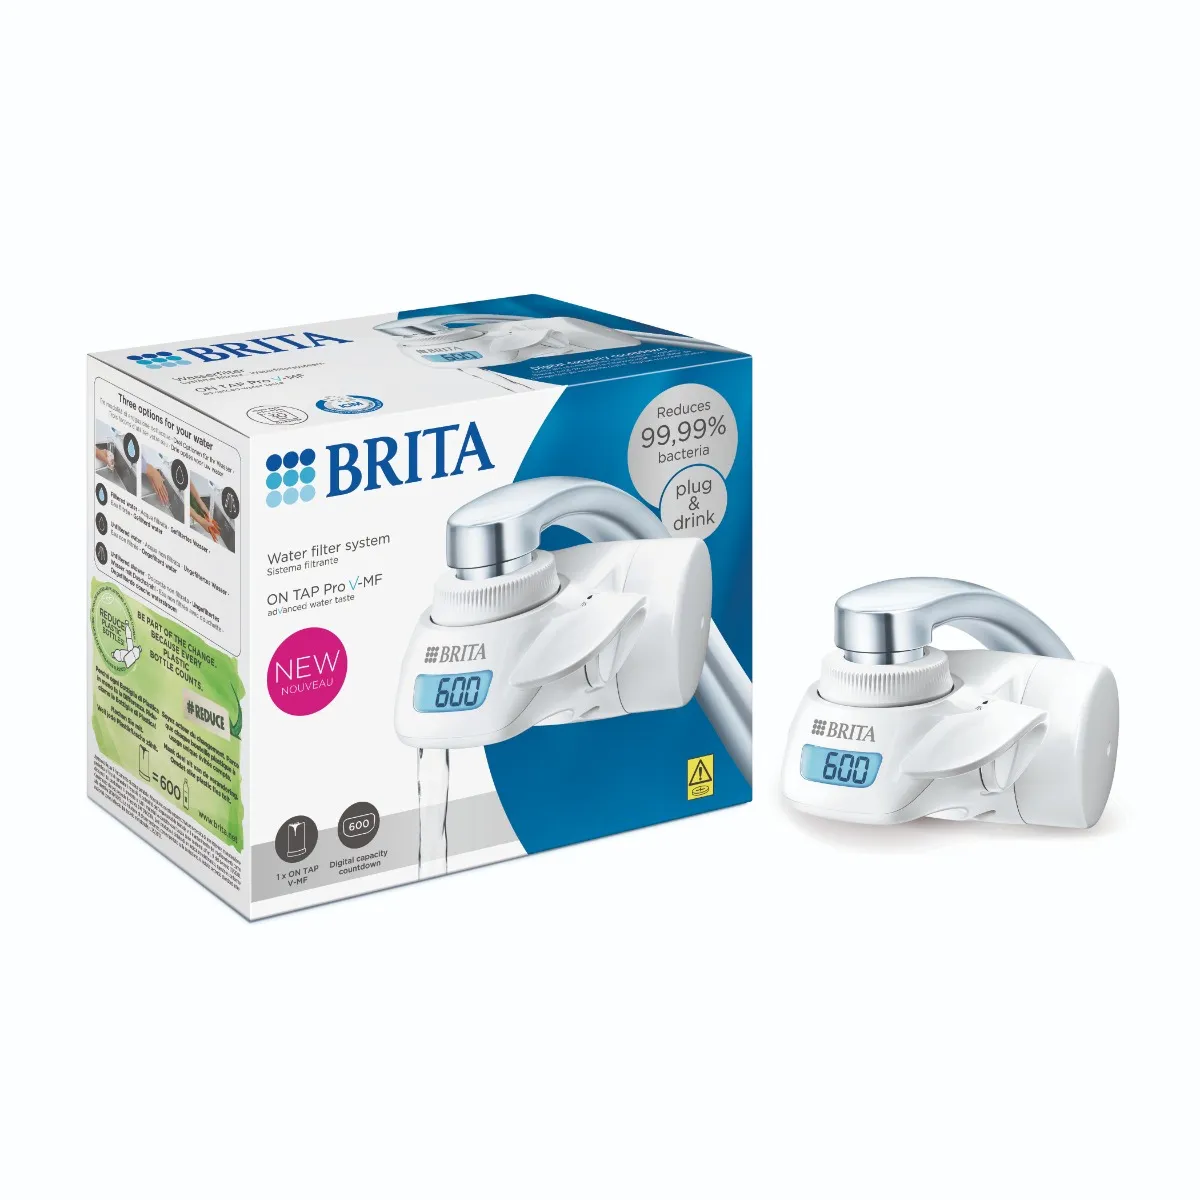 BRITA ON TAP Pro V-MF System vodní filtr na kohoutek s displejem